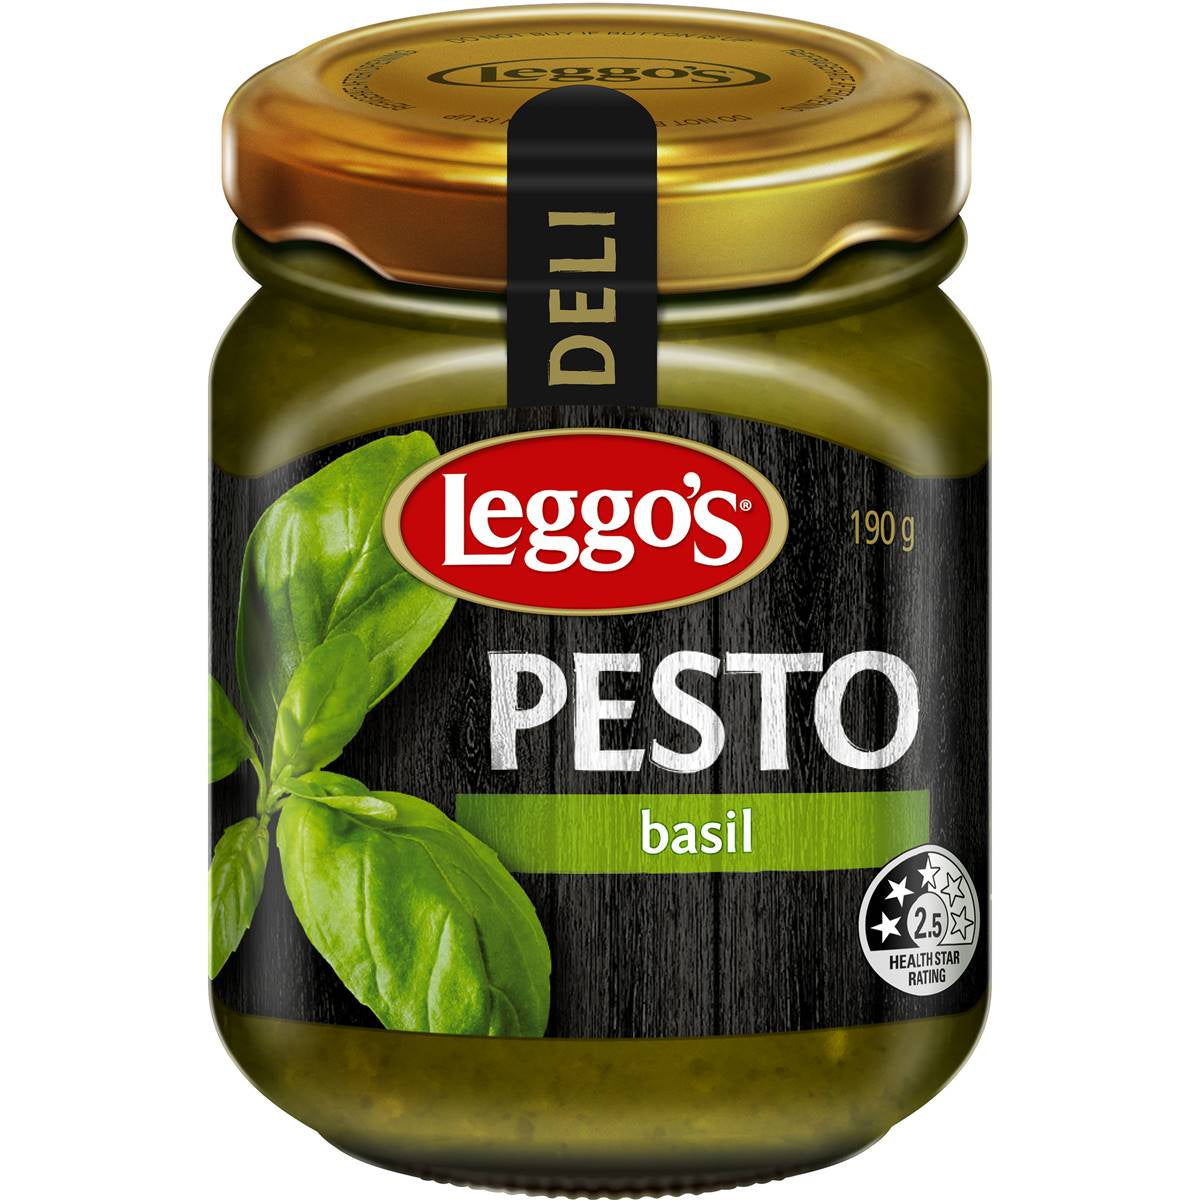 Leggo's Pesto Basil 190g